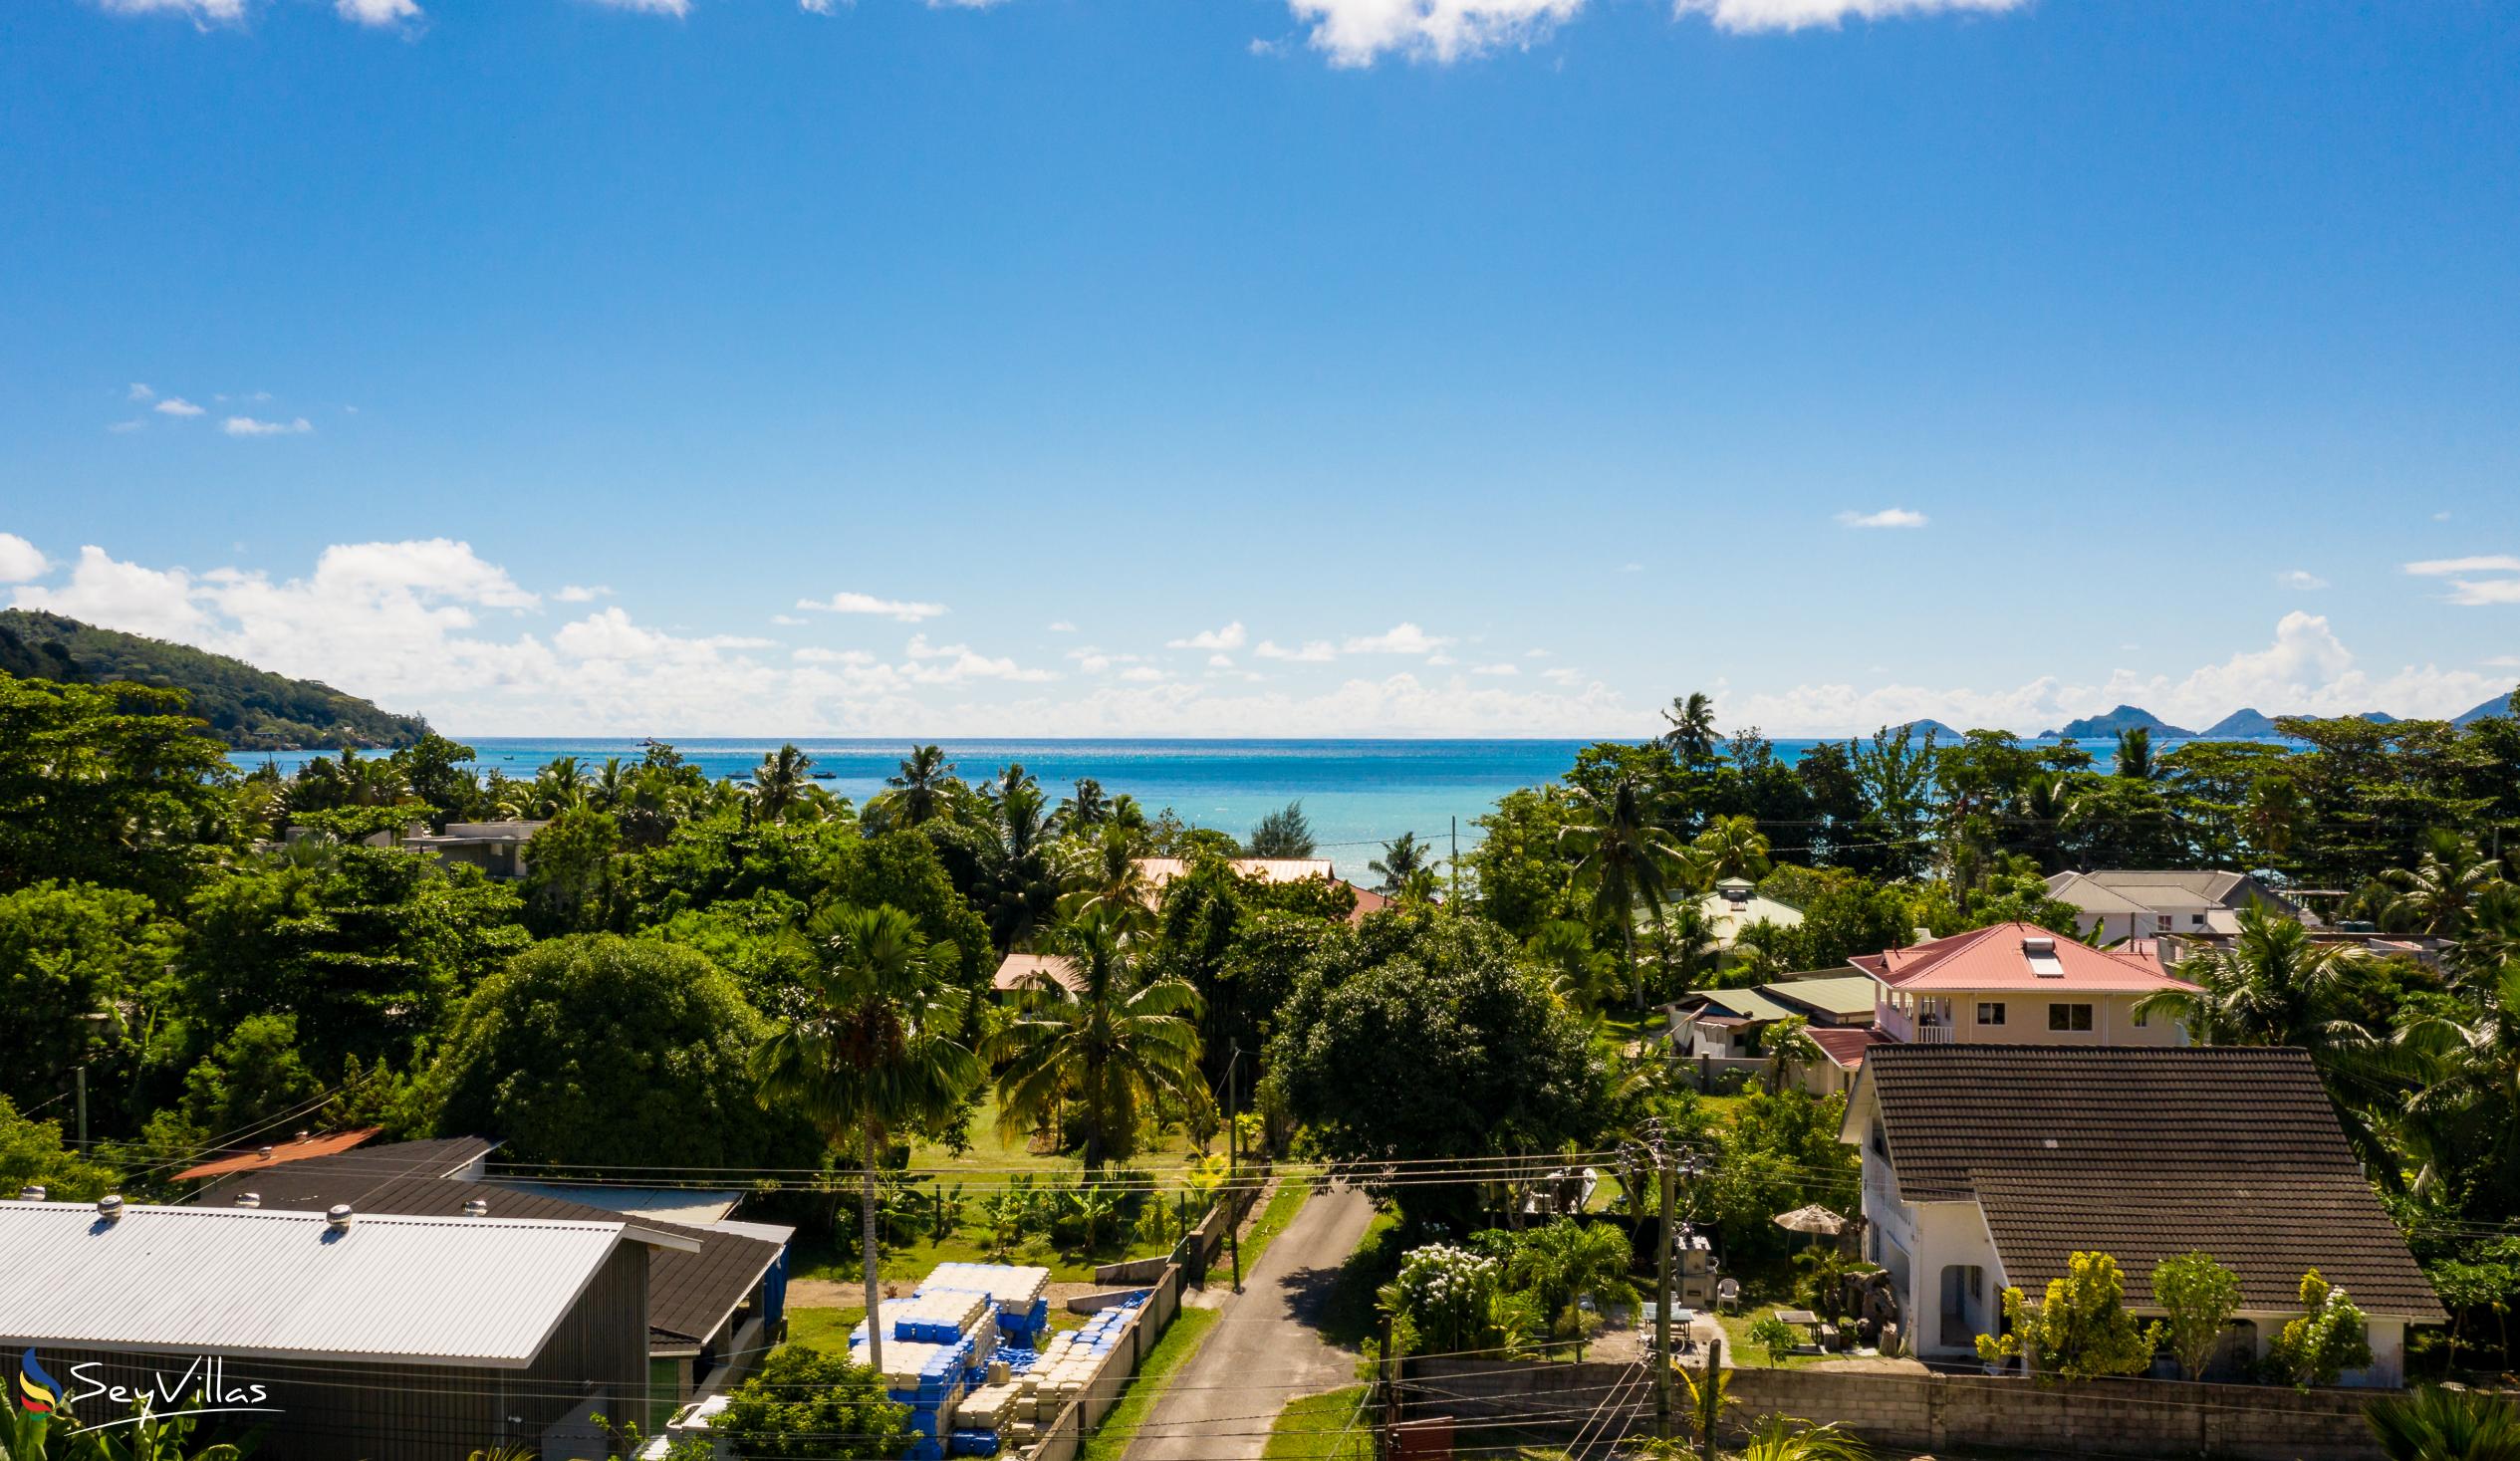 Foto 21: 340 Degrees Mountain View Apartments - Location - Mahé (Seychelles)